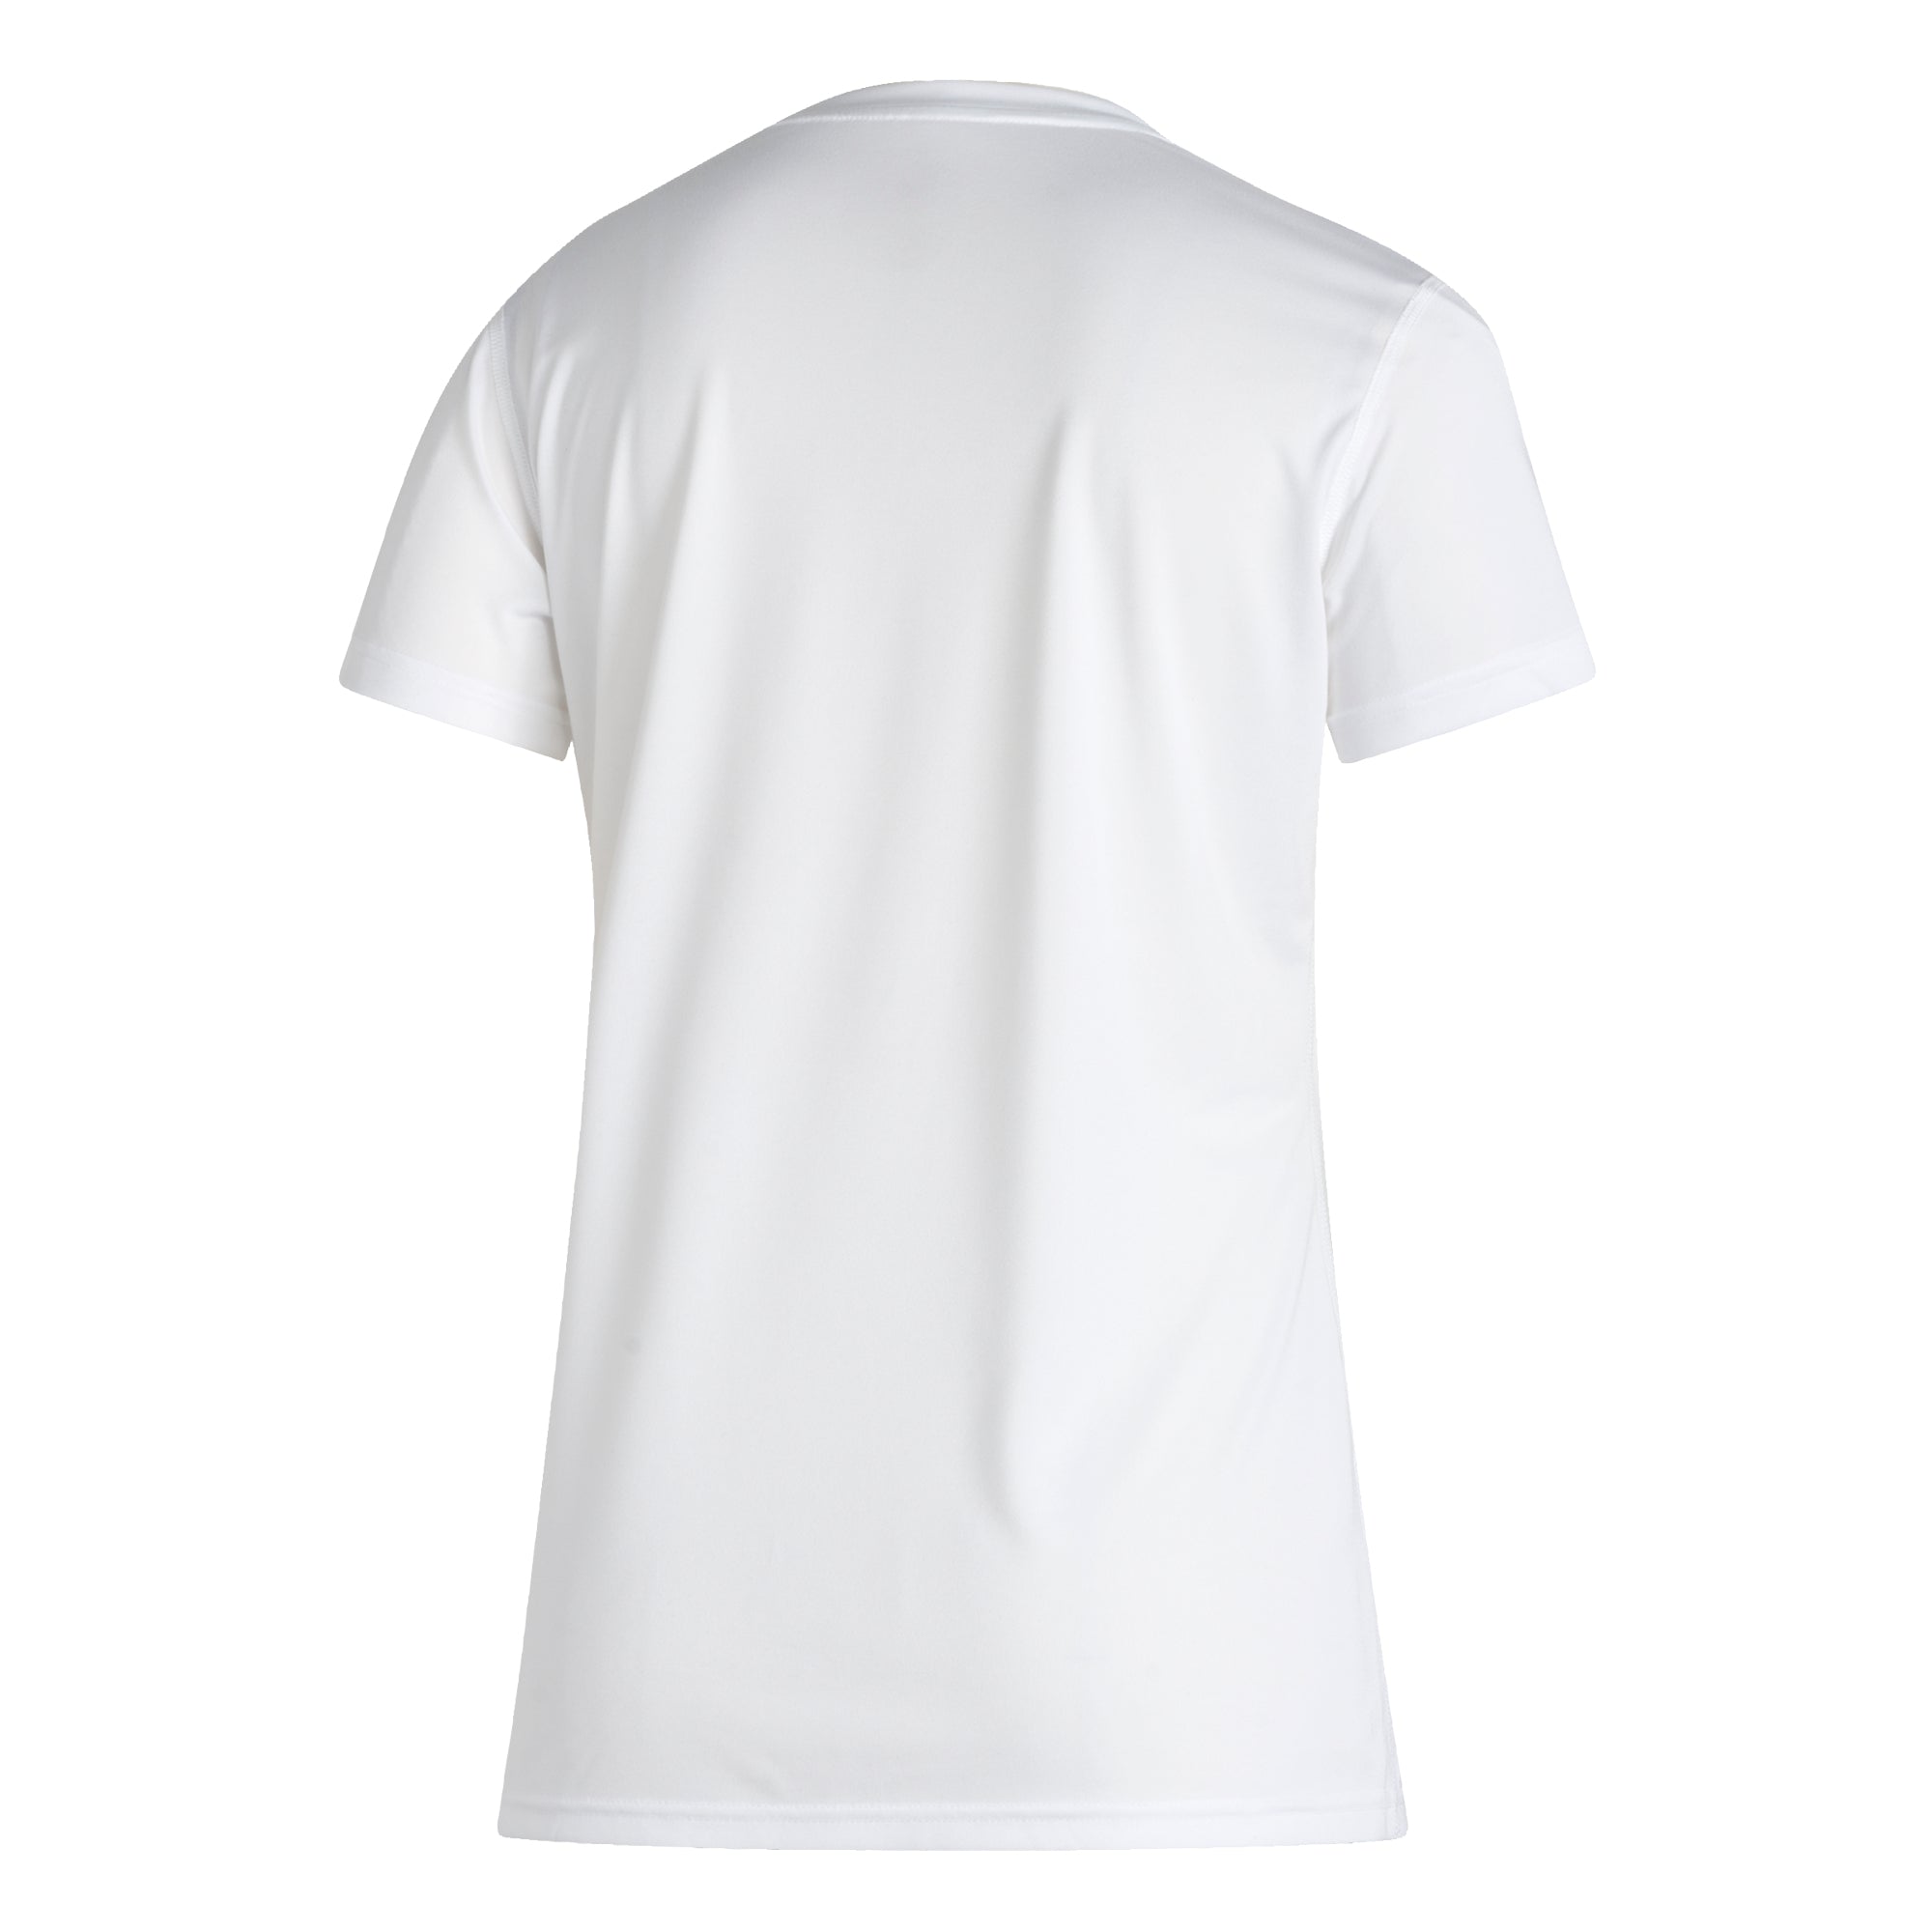 Inter Miami CF 2022 adidas Womens Vintage Creator T-Shirt - White